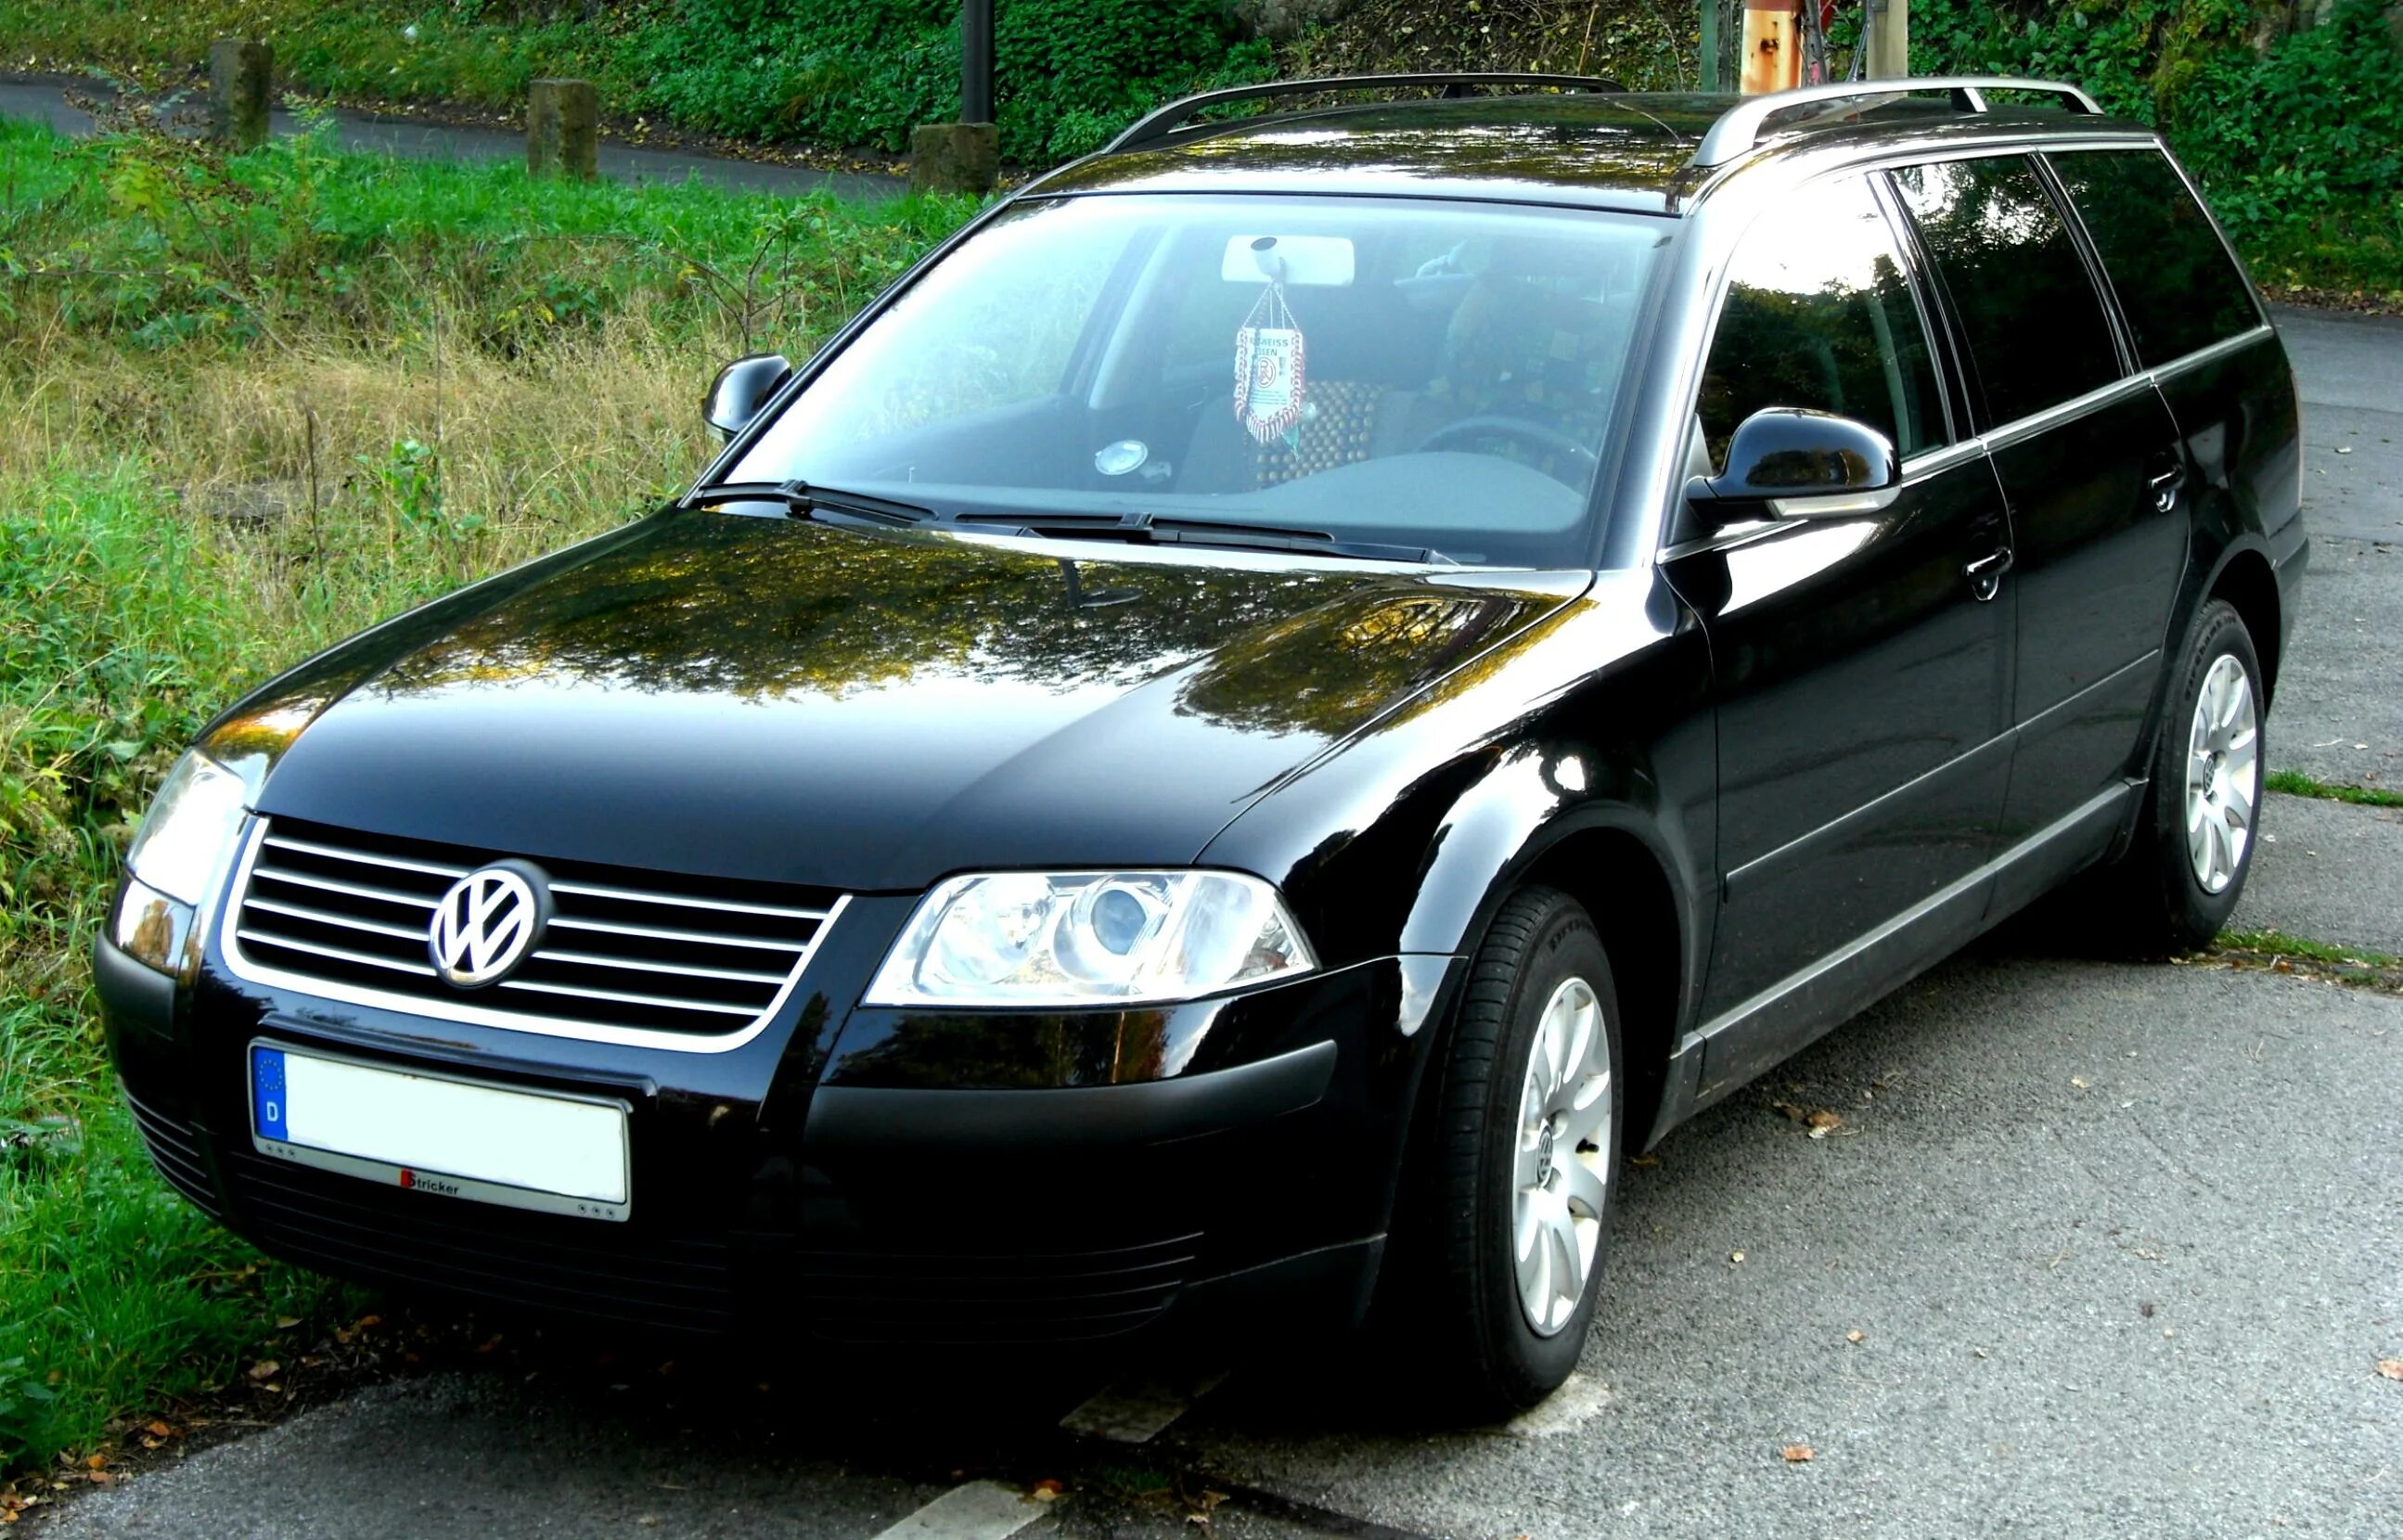 VW Passat b5 variant. VW Passat b5 2003. Фольксваген Пассат б5 универсал. Volkswagen Passat b5 универсал. Б5 плюс универсал